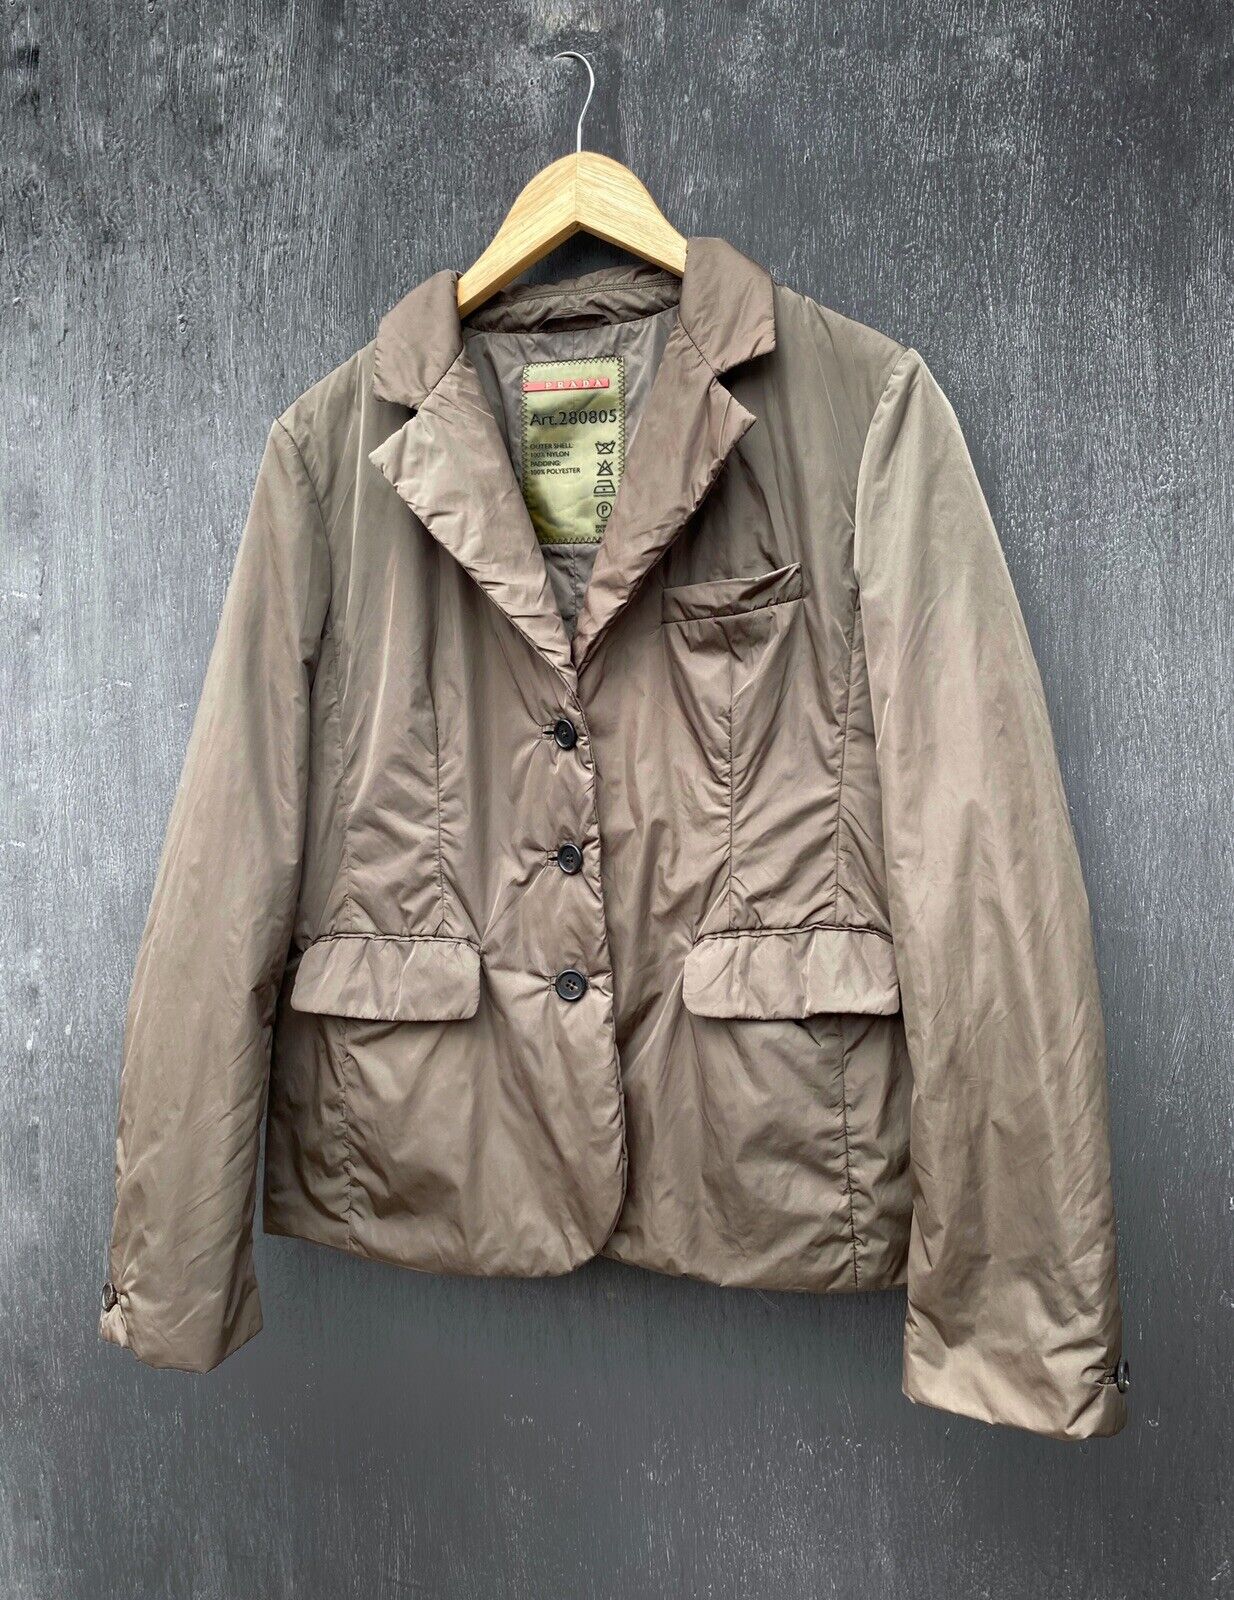 Authentic Prada Vintage Nylon blazer jacket size 46 made in italy